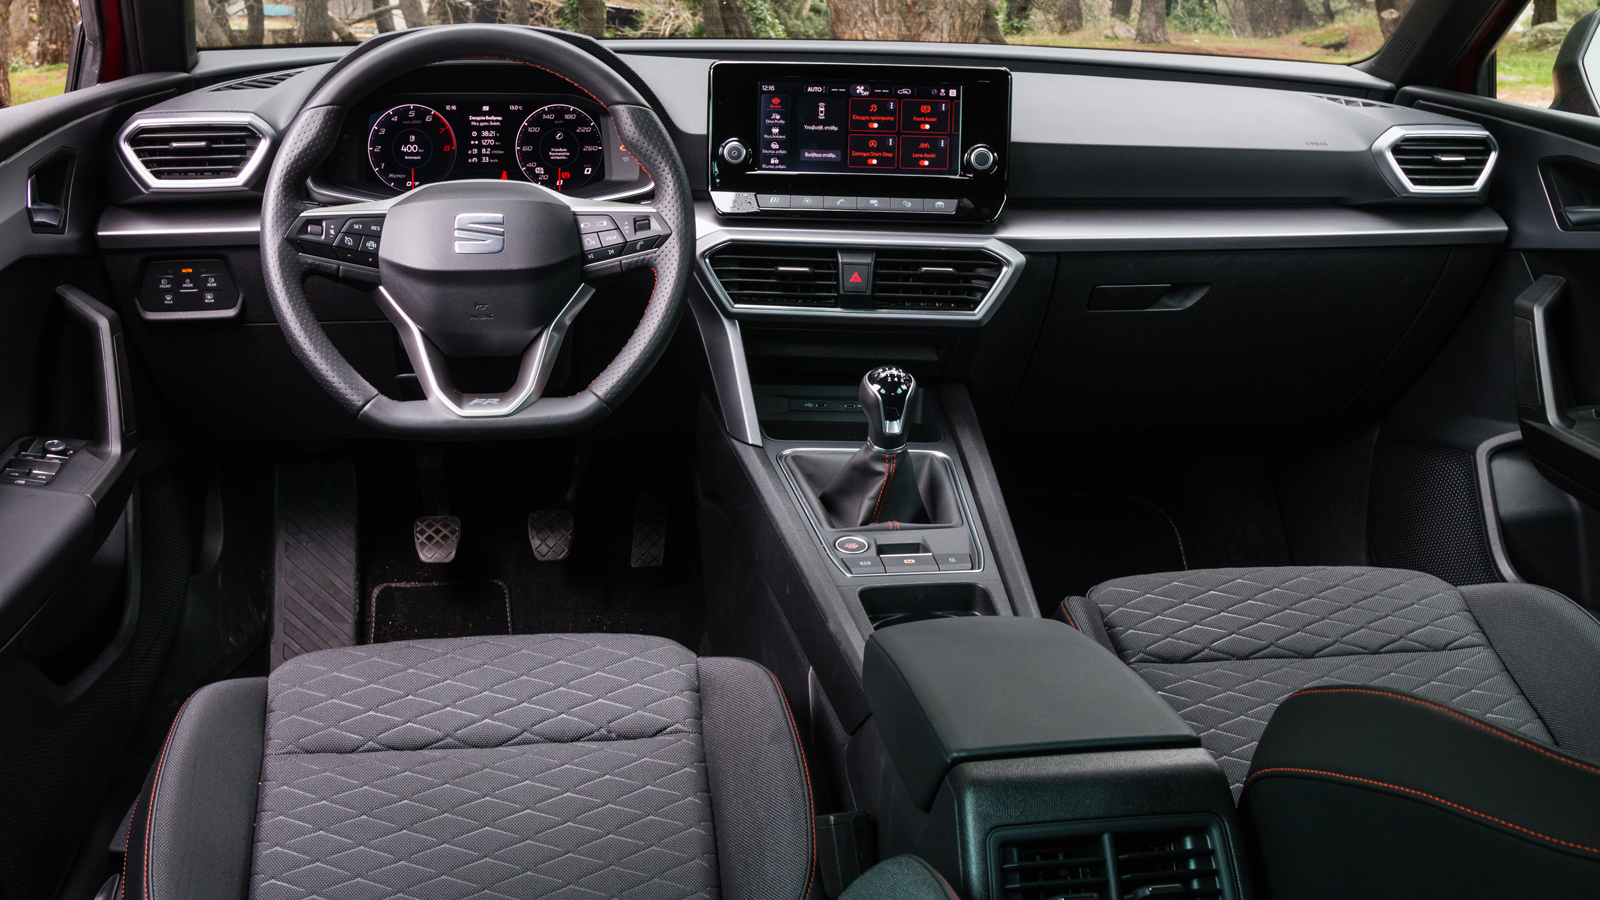 Ford Focus VS Seat Leon: Τι προσφέρουν στον τομέα εξοπλισμού άνεσης και ασφαλείας;